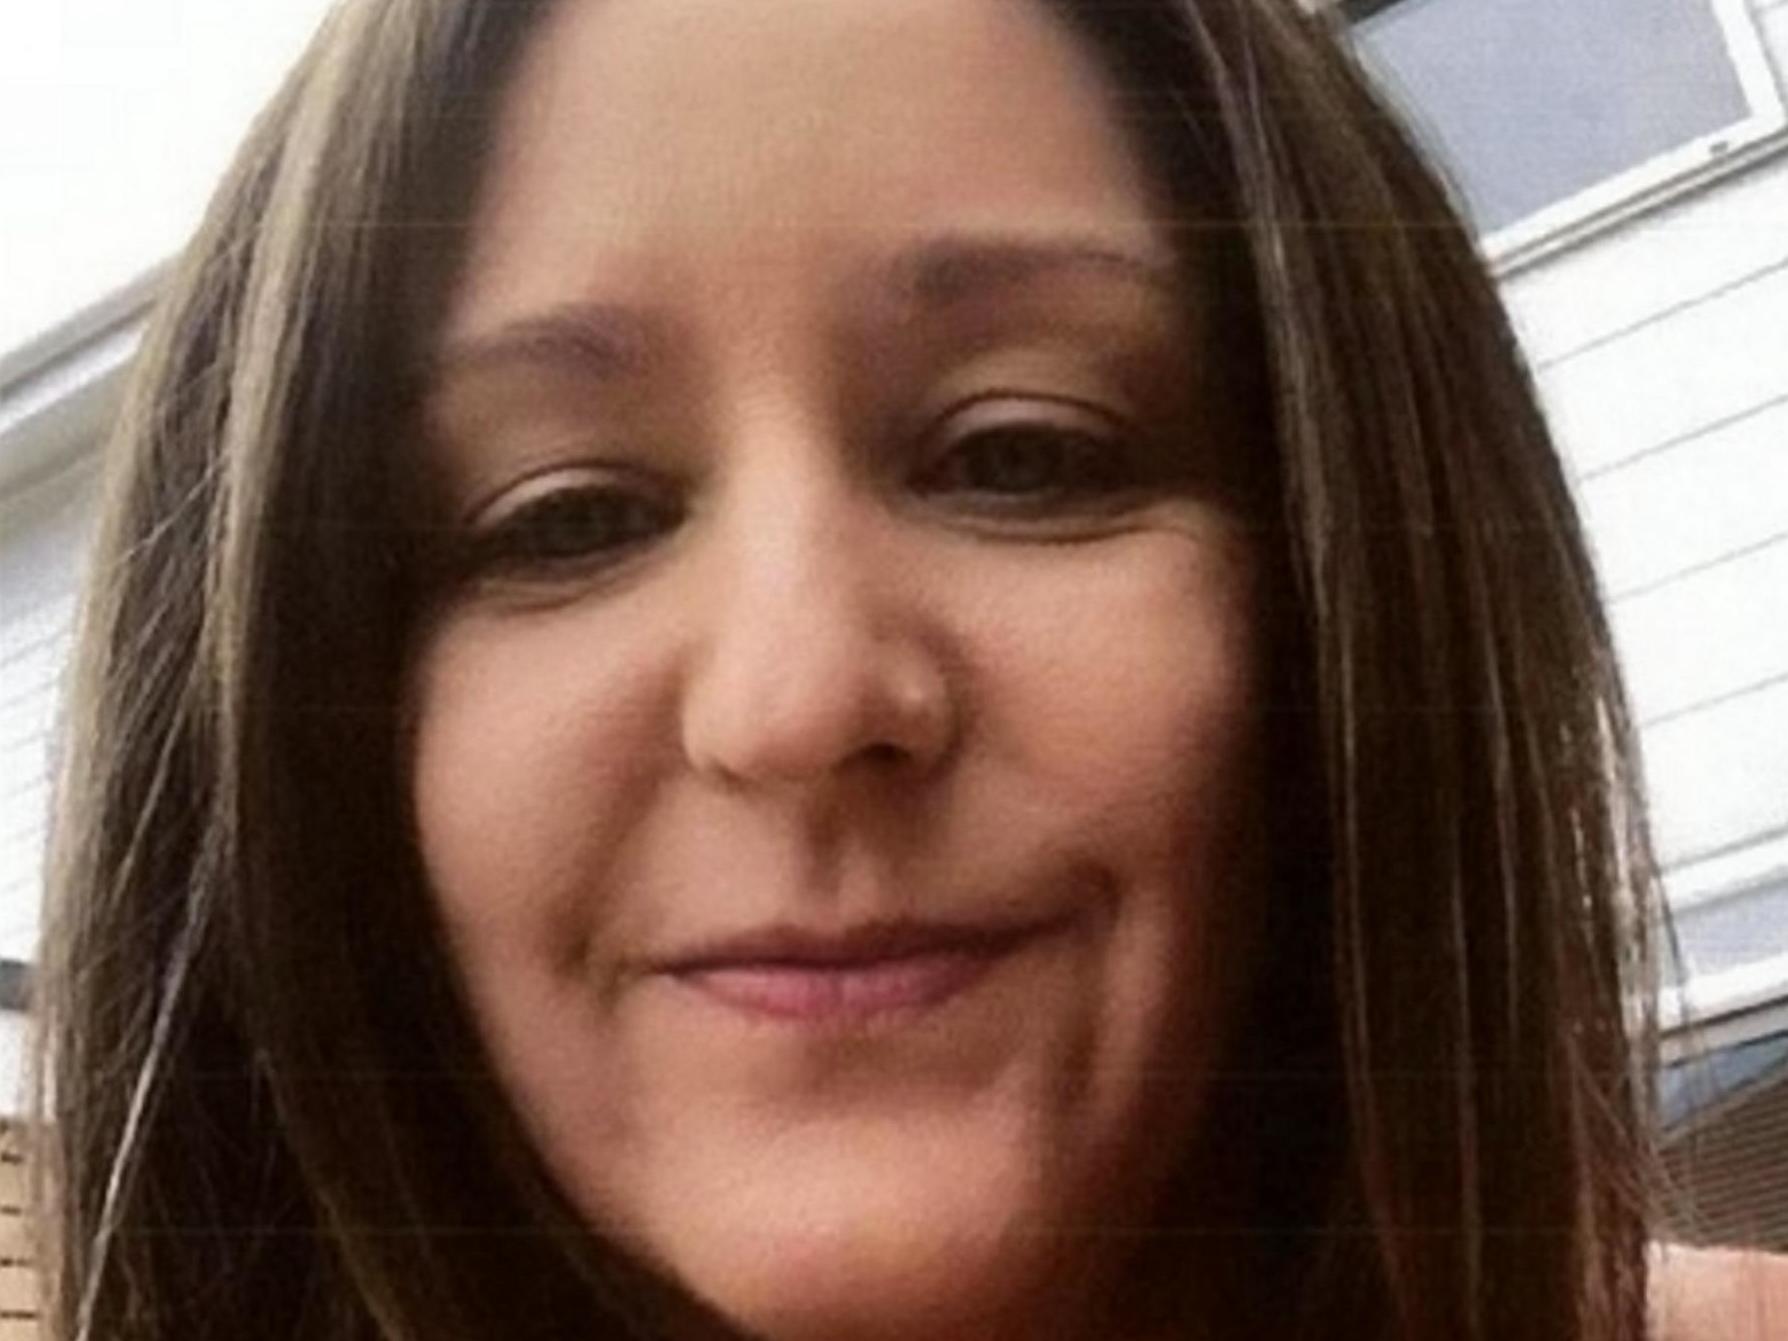 Zsuzsanna Besenyei's body washed up on the Jersey coastline six days after she went missing.